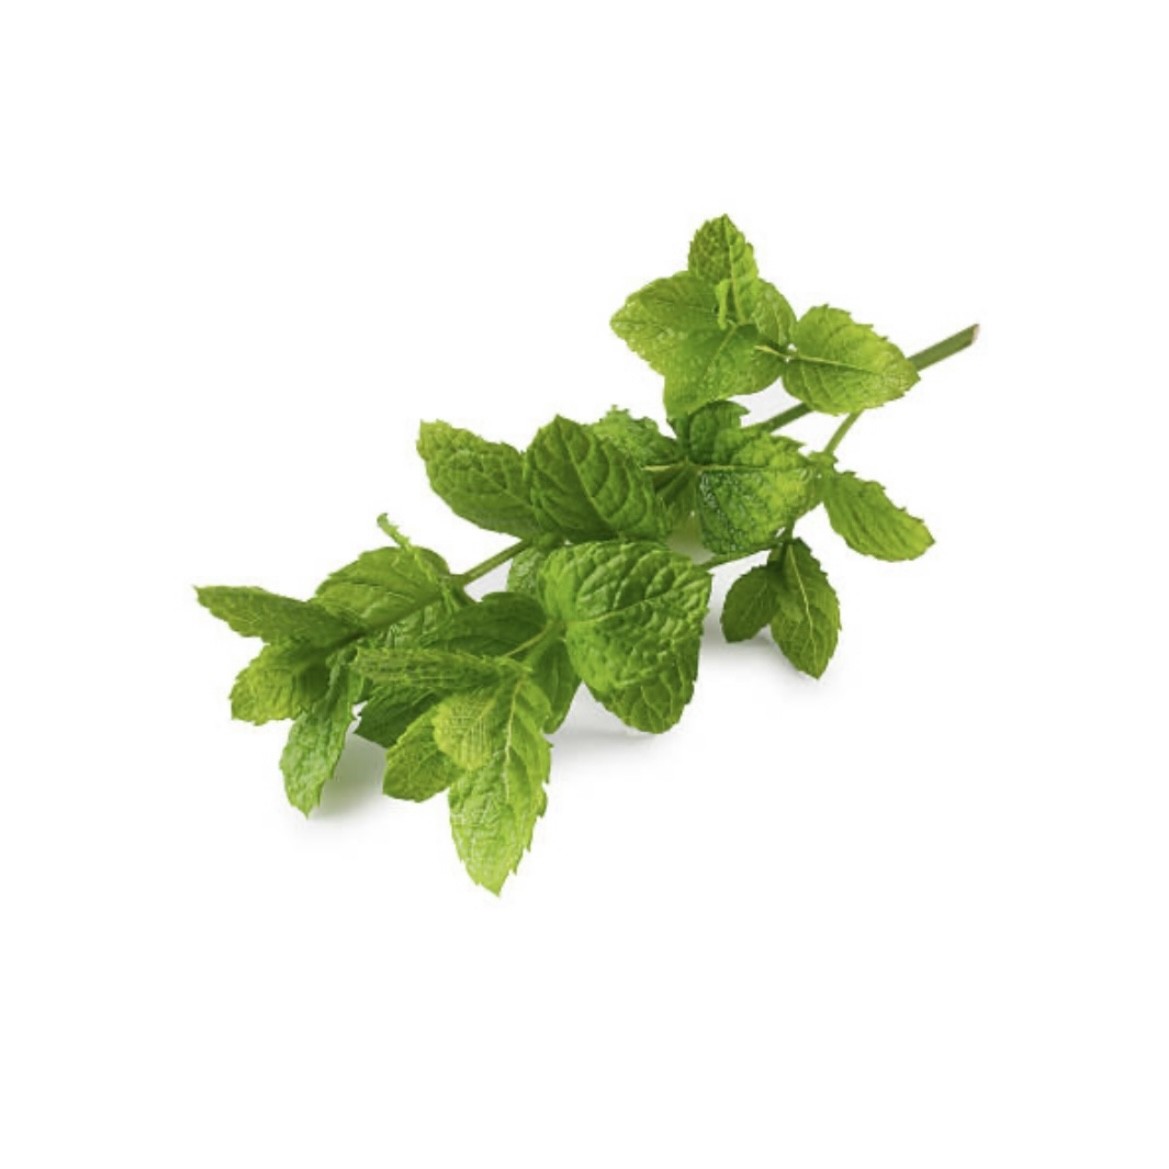 Mint Leaves (Pudina Pata)